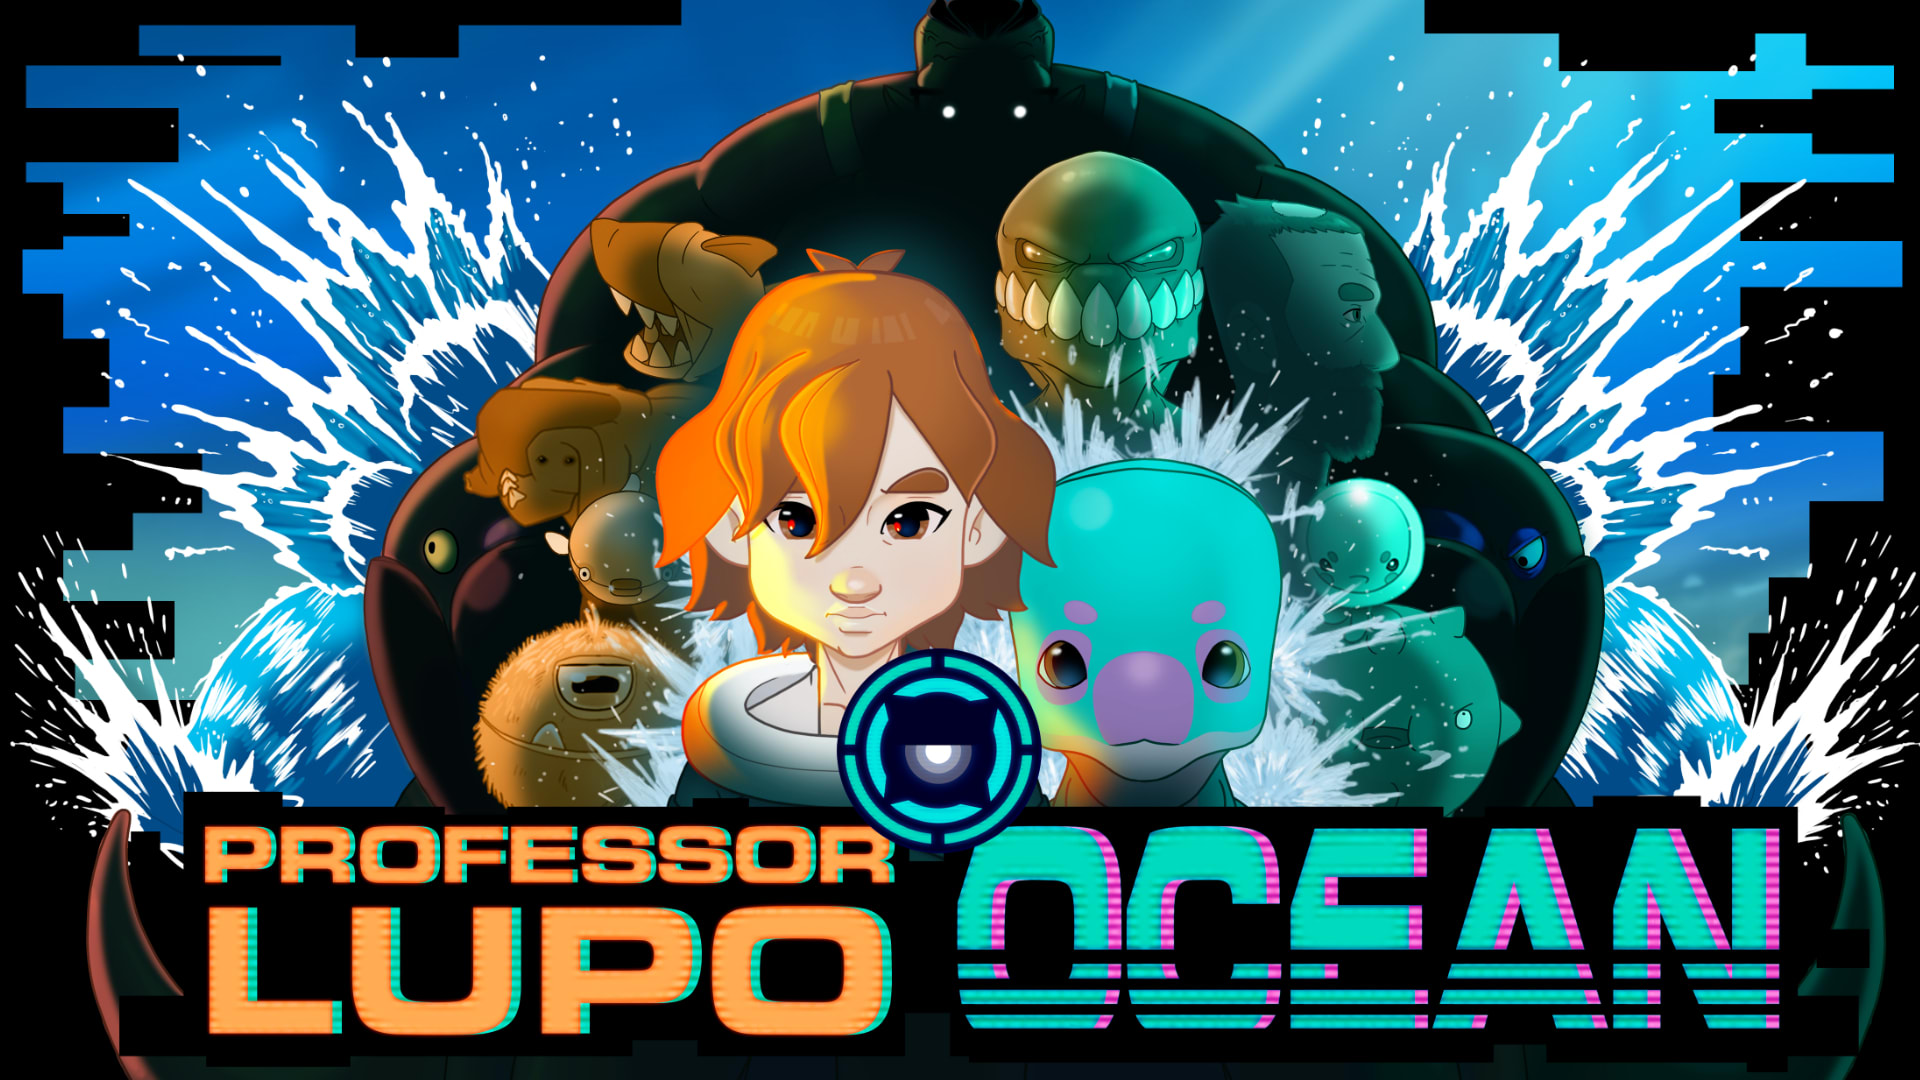 Professor Lupo: Ocean 1